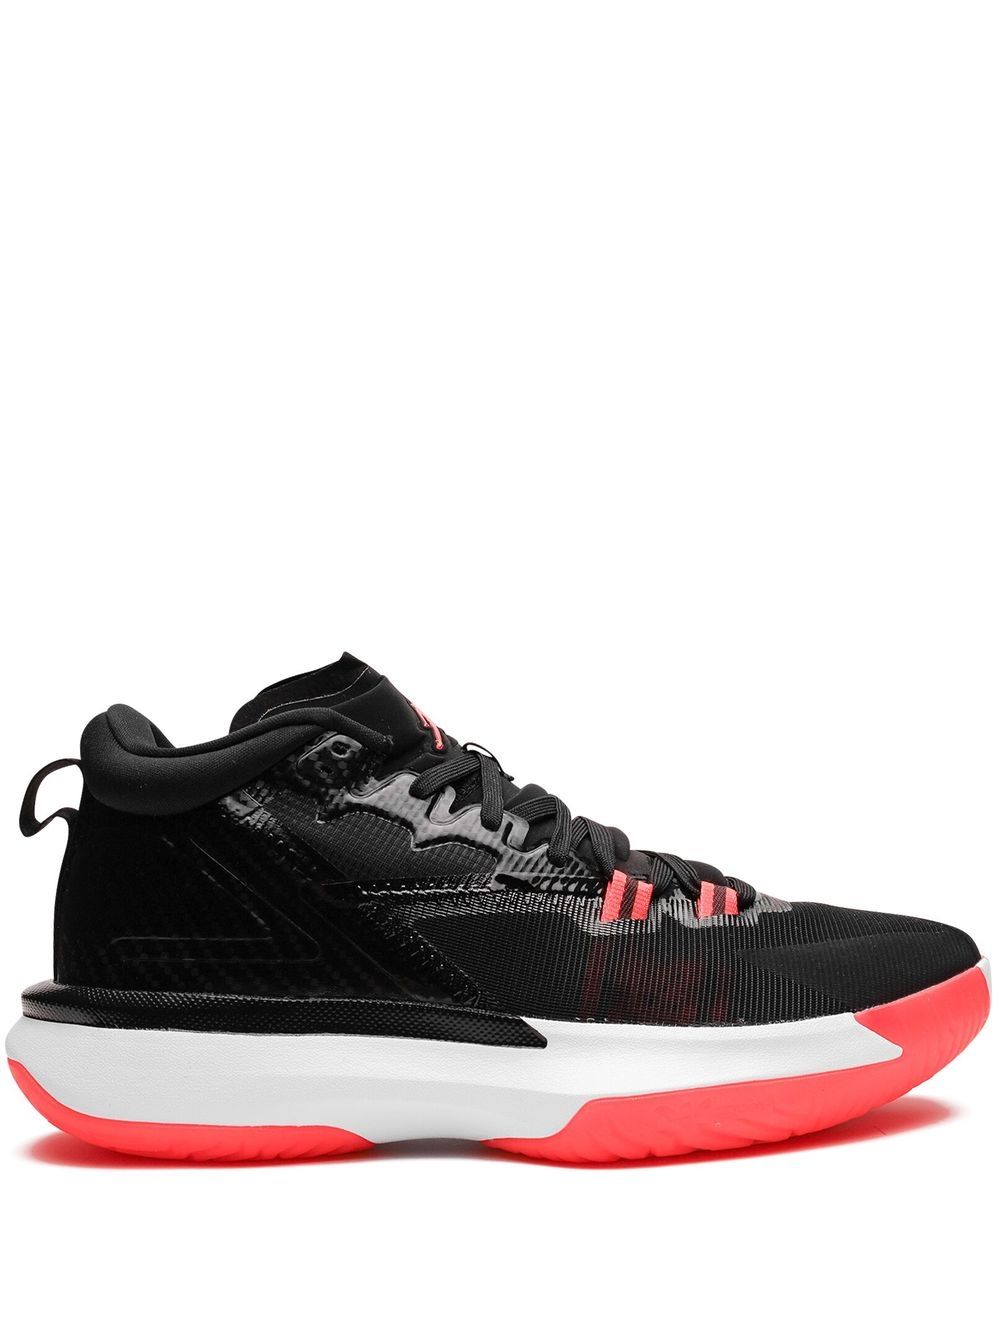 Jordan Zion 1 "Infrared" low-top sneakers - Black